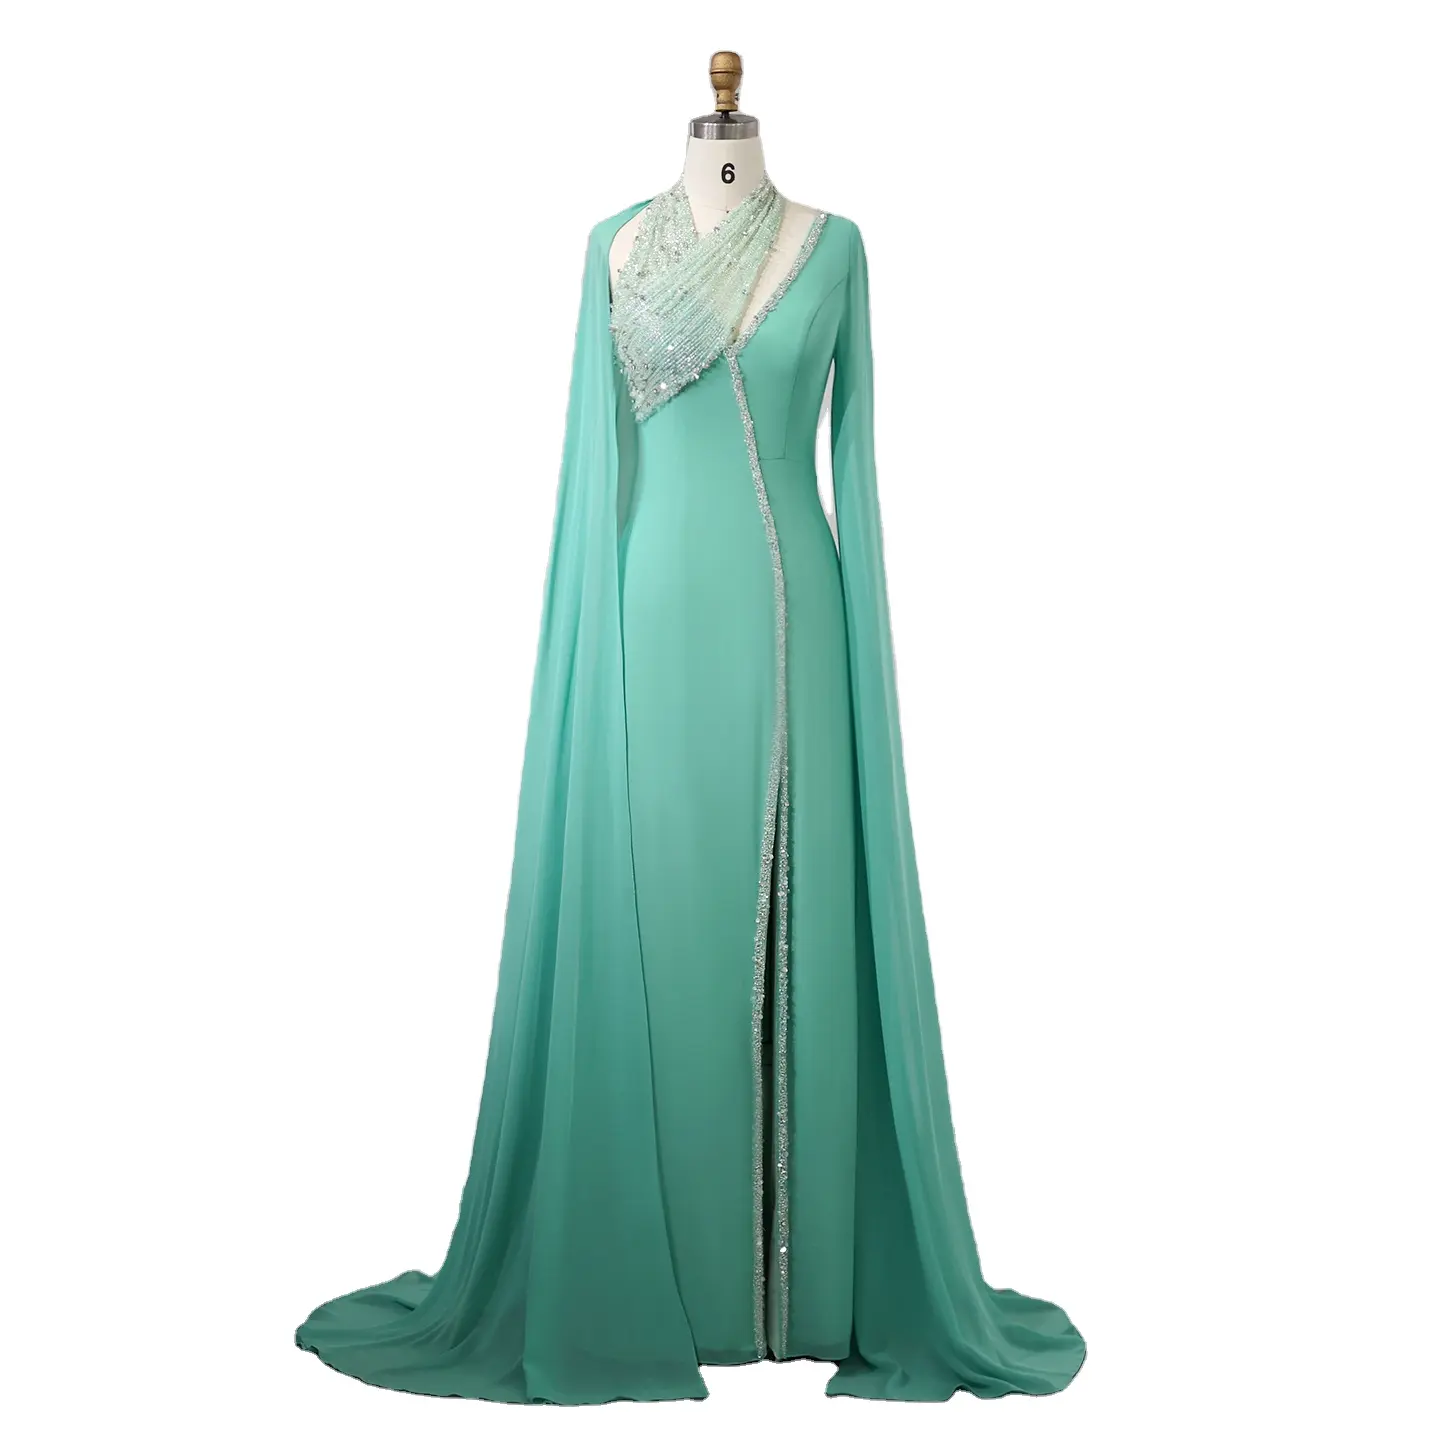 Sharon Said SS474 Luxury Beaded Arabic Turquoise Green Chiffon Dubai Evening Dress With Cape Sleeves